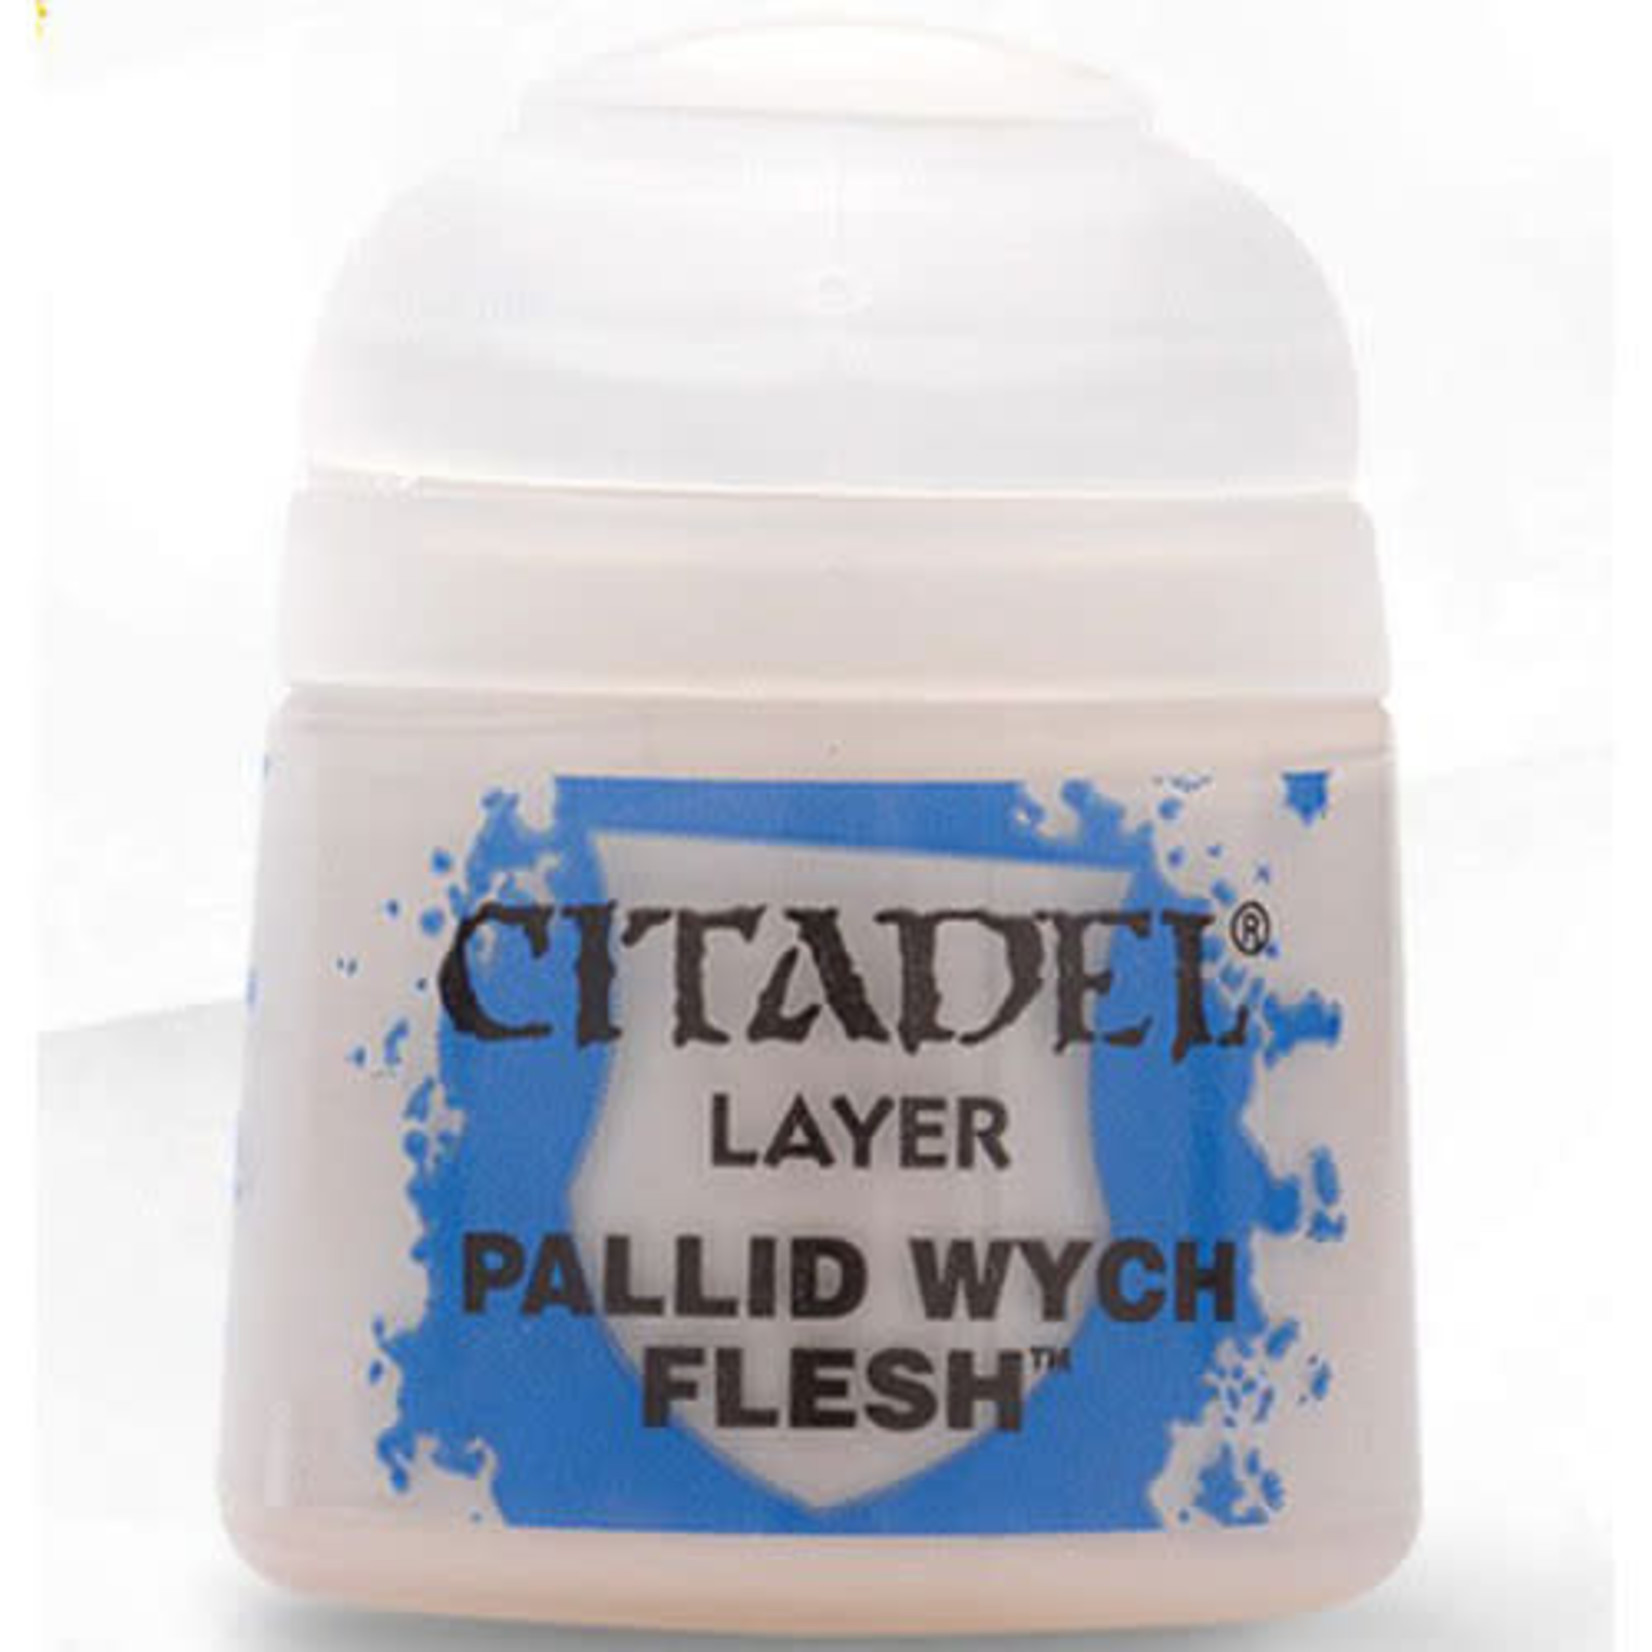 Citadel Citadel Paint - Layer: Pallid Wych Flesh